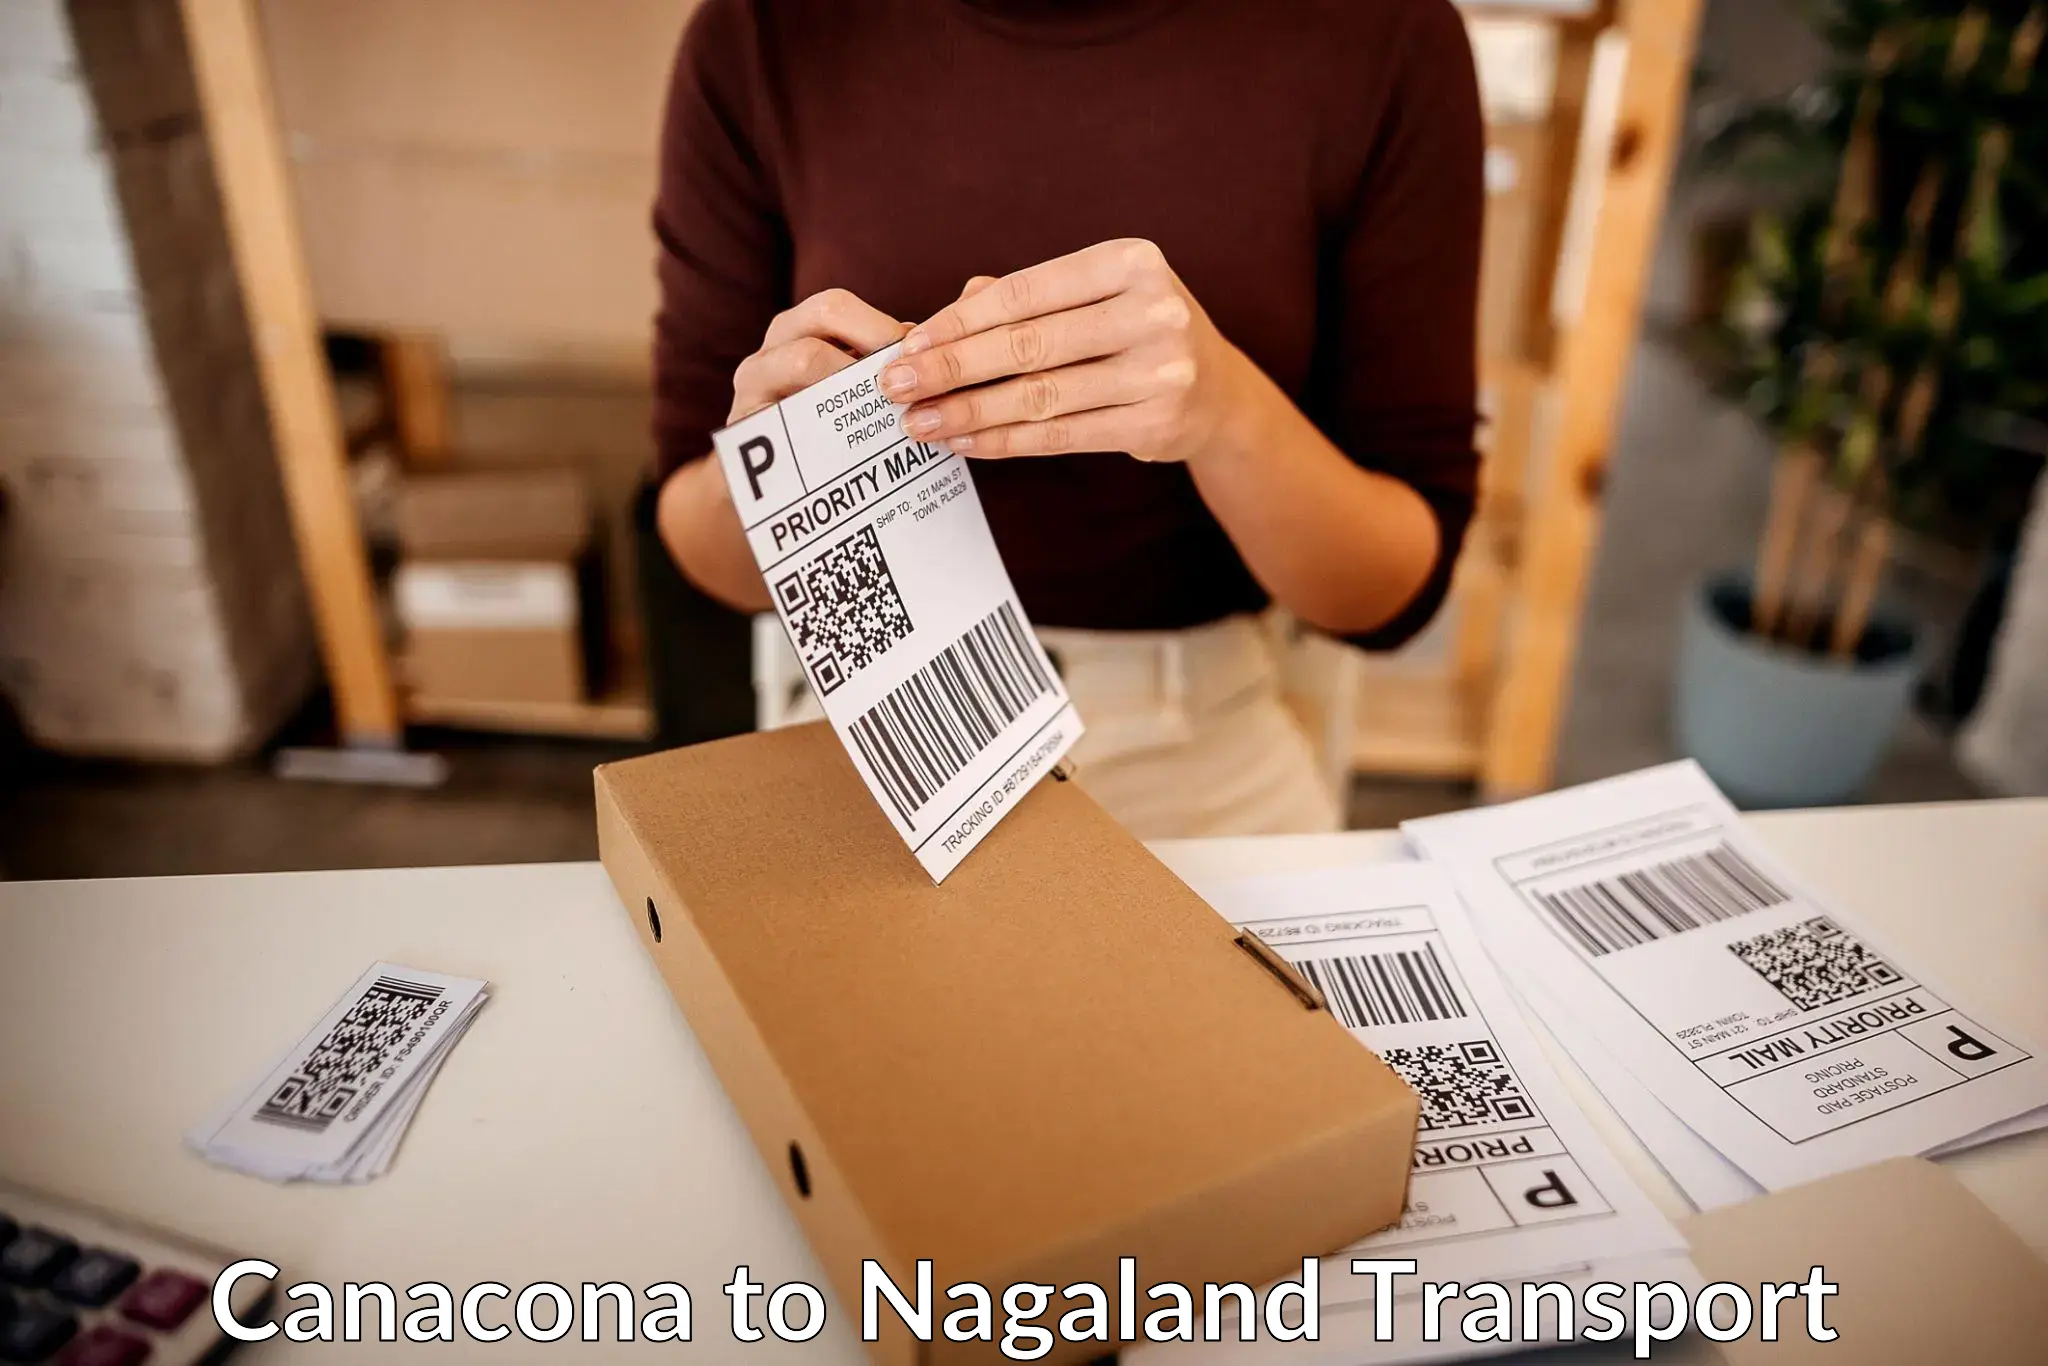 Transport in sharing Canacona to NIT Nagaland